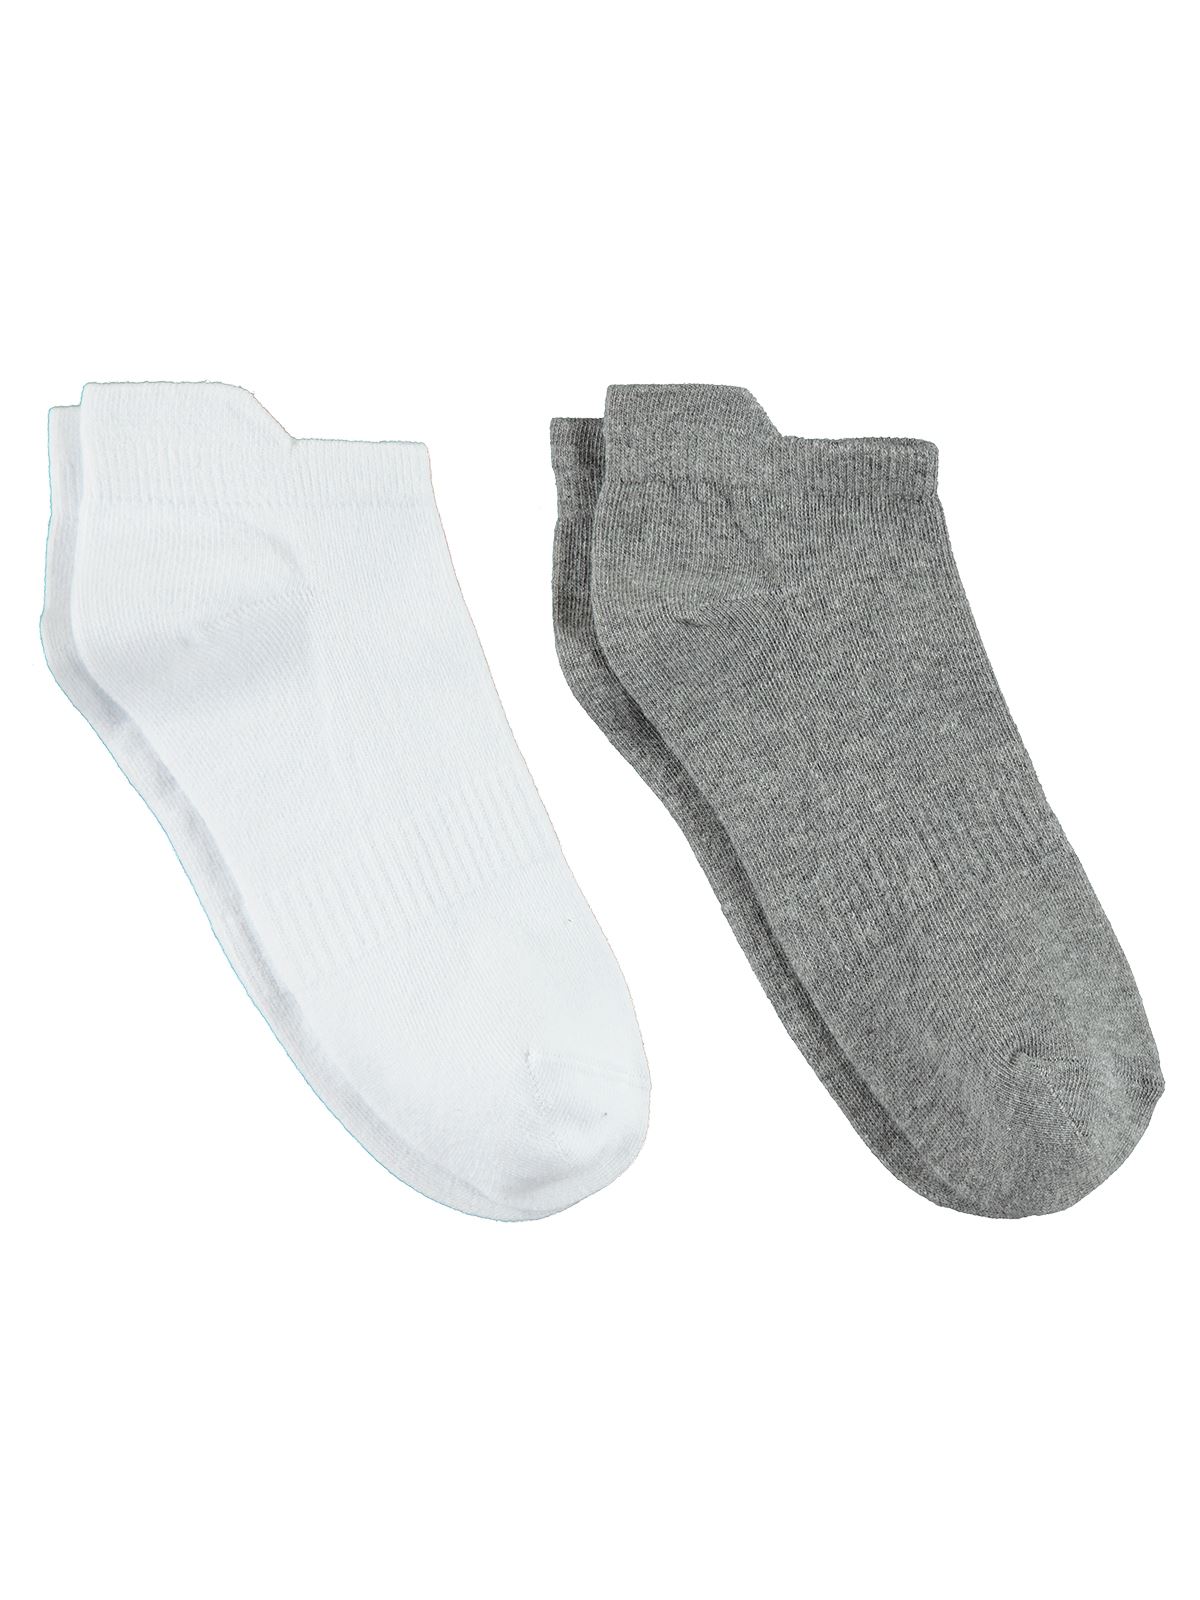 Gzn Erkek 2'li Dikişsiz Patik Çorap 40-44 Numara Gri-Beyaz